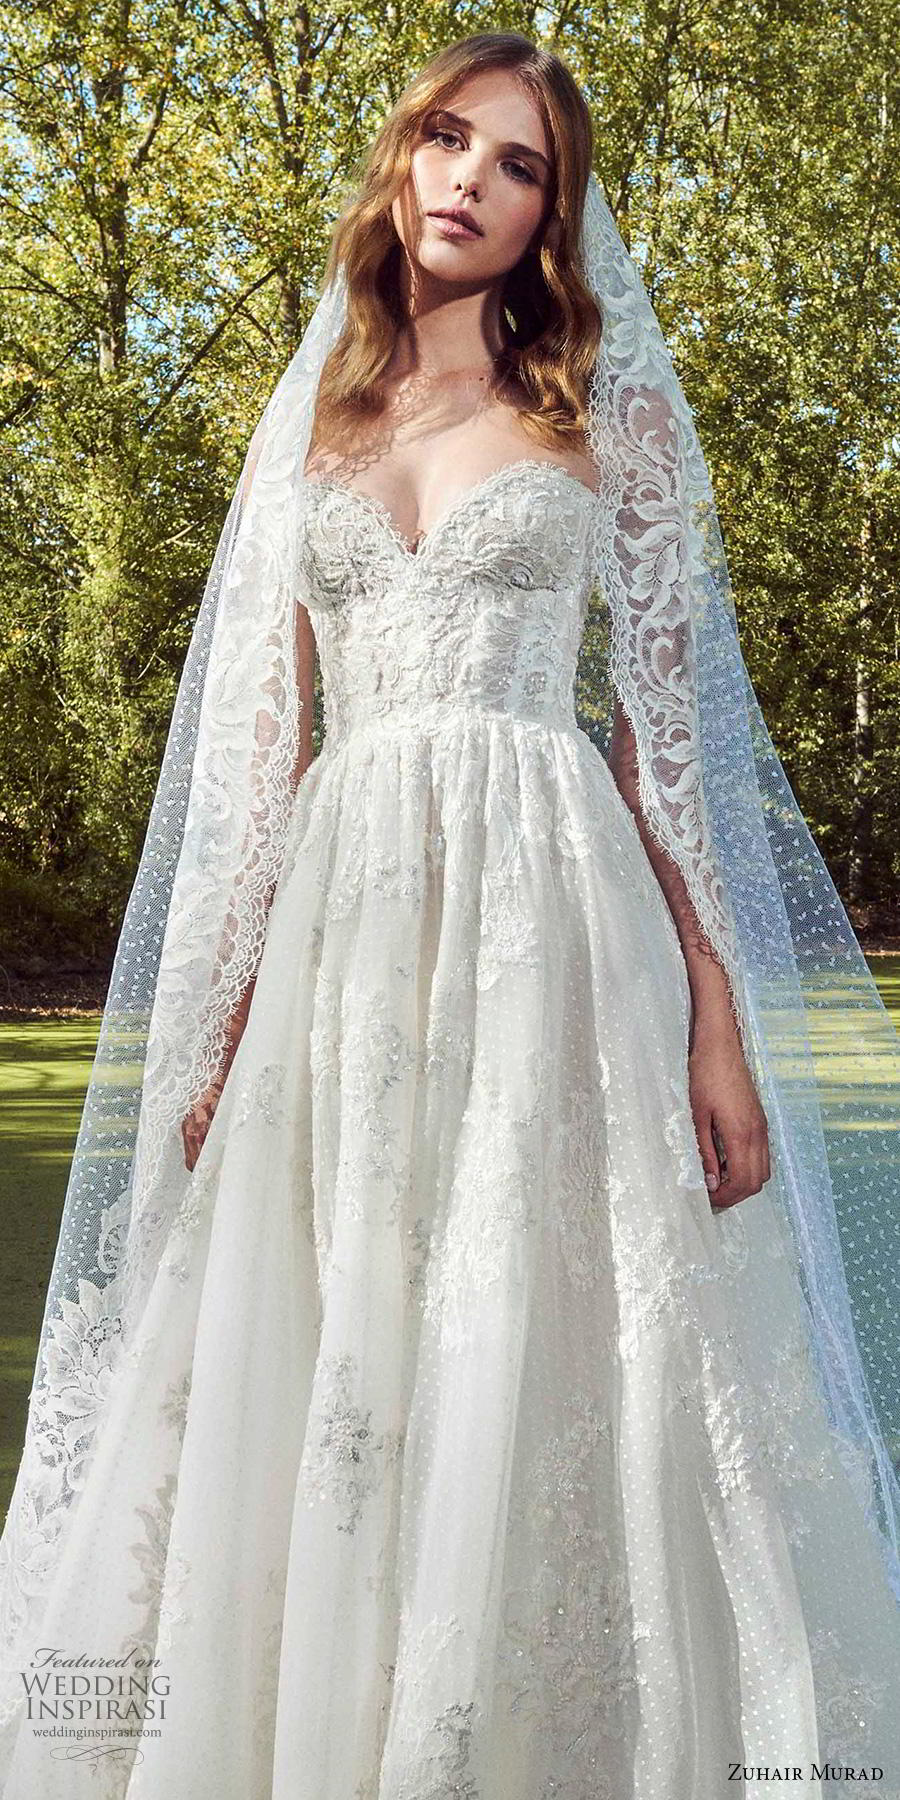 Zuhair Murad Bridal Fall 2019 Wedding Dreses | Wedding Inspirasi